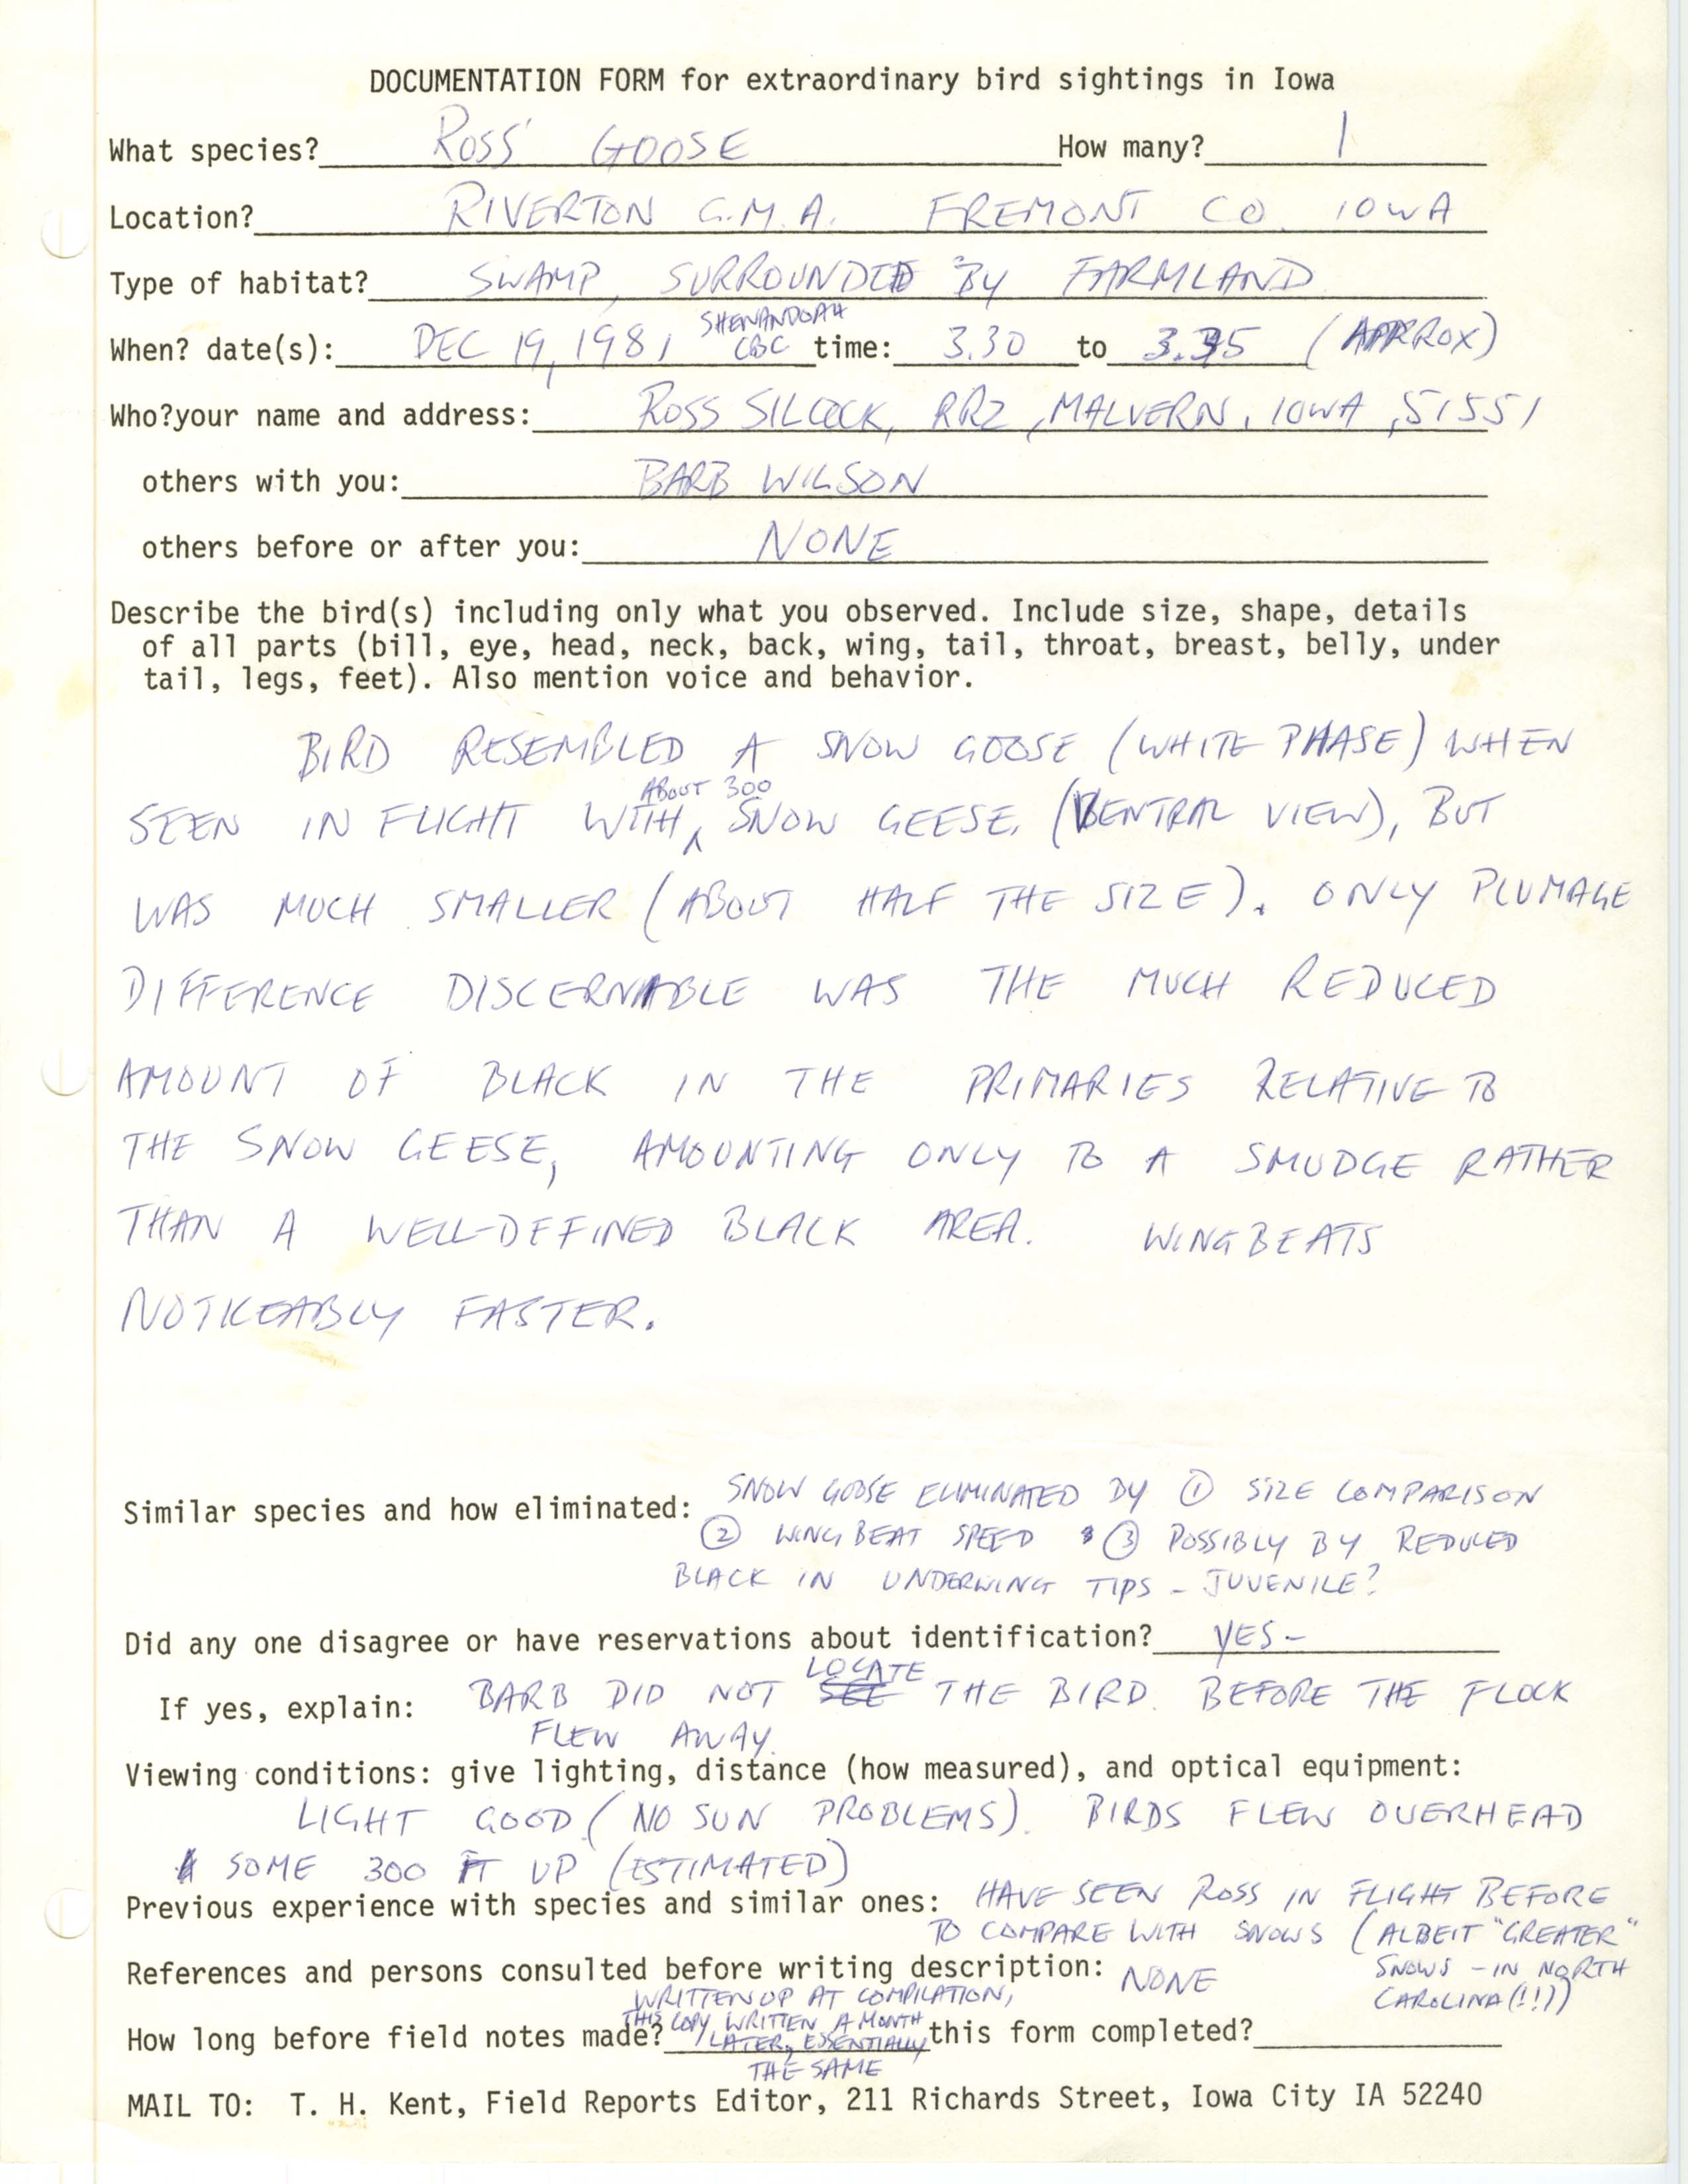 Rare bird documentation form for Ross' Goose at Riverton Game Management Area, 1981